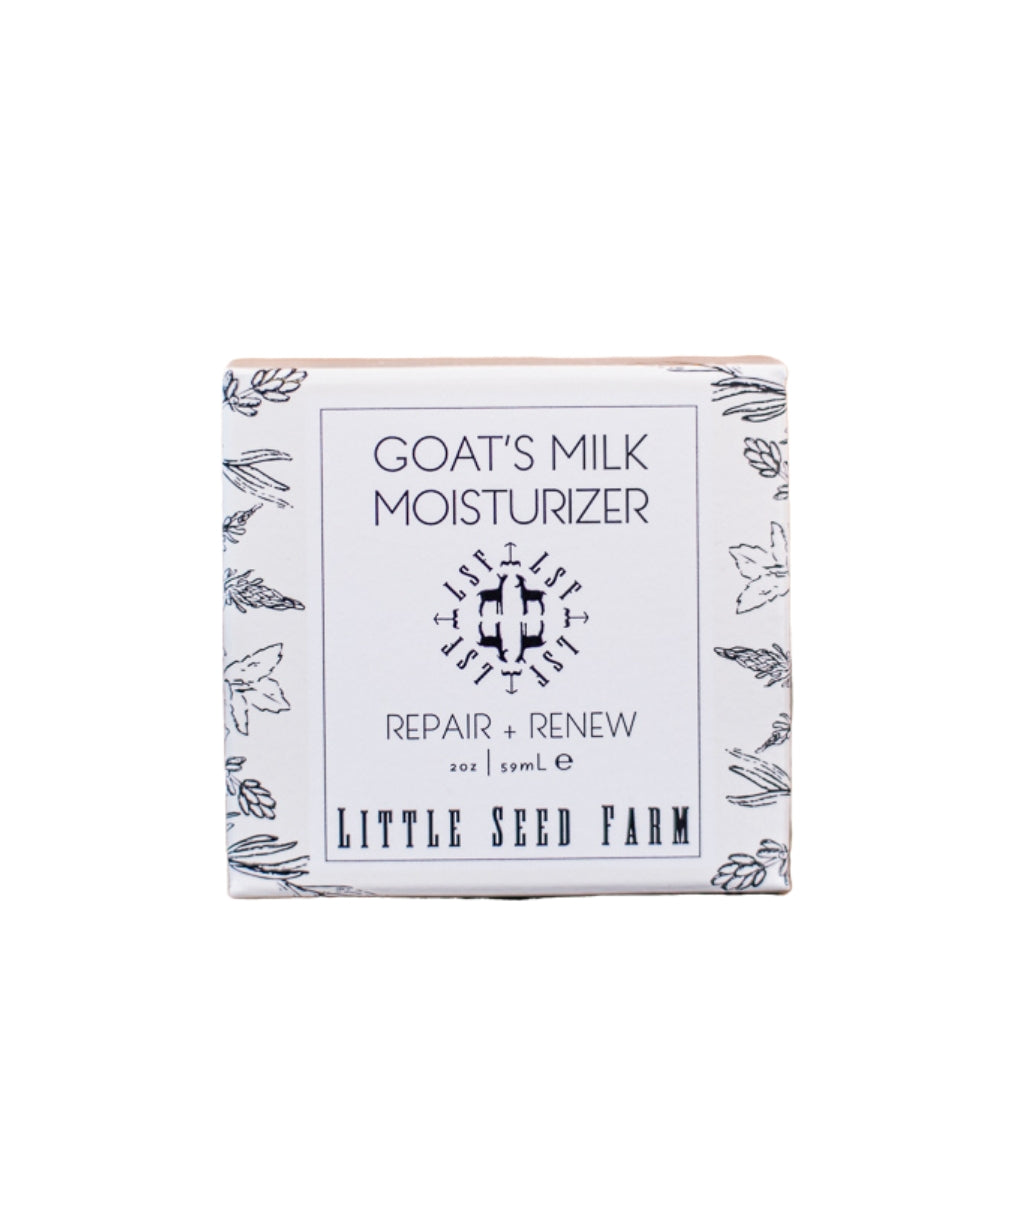 Goat’s Milk Moisturizer